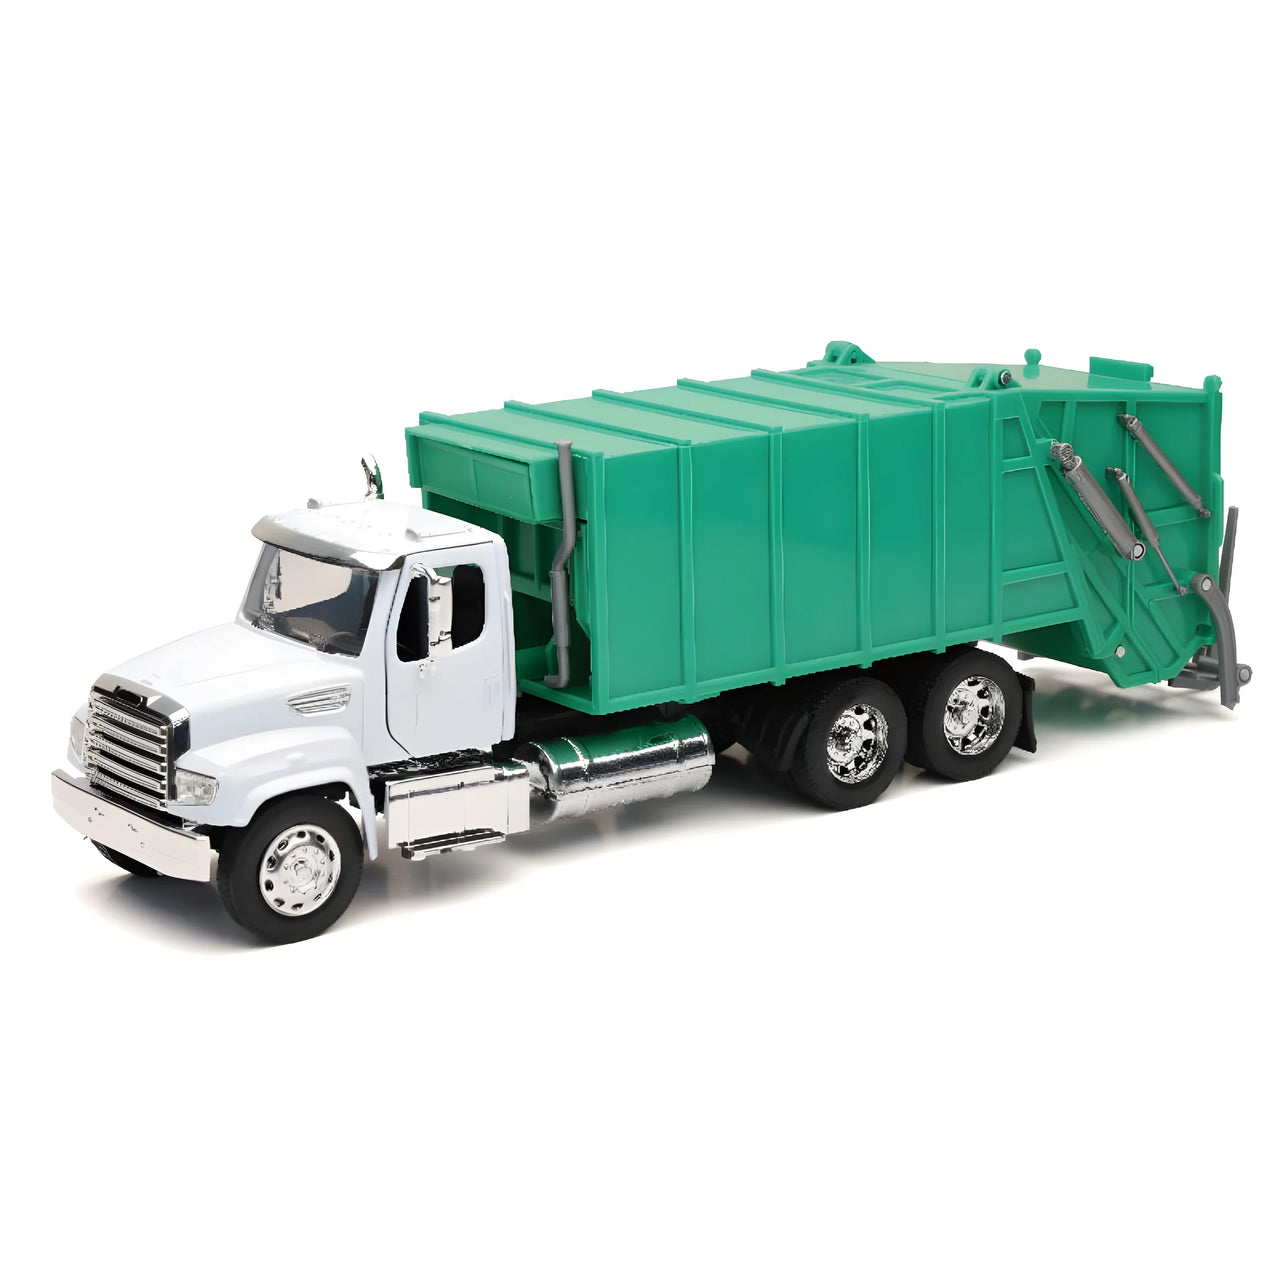 11033 Freightliner 114SD Garbage Truck 1:32 Scale